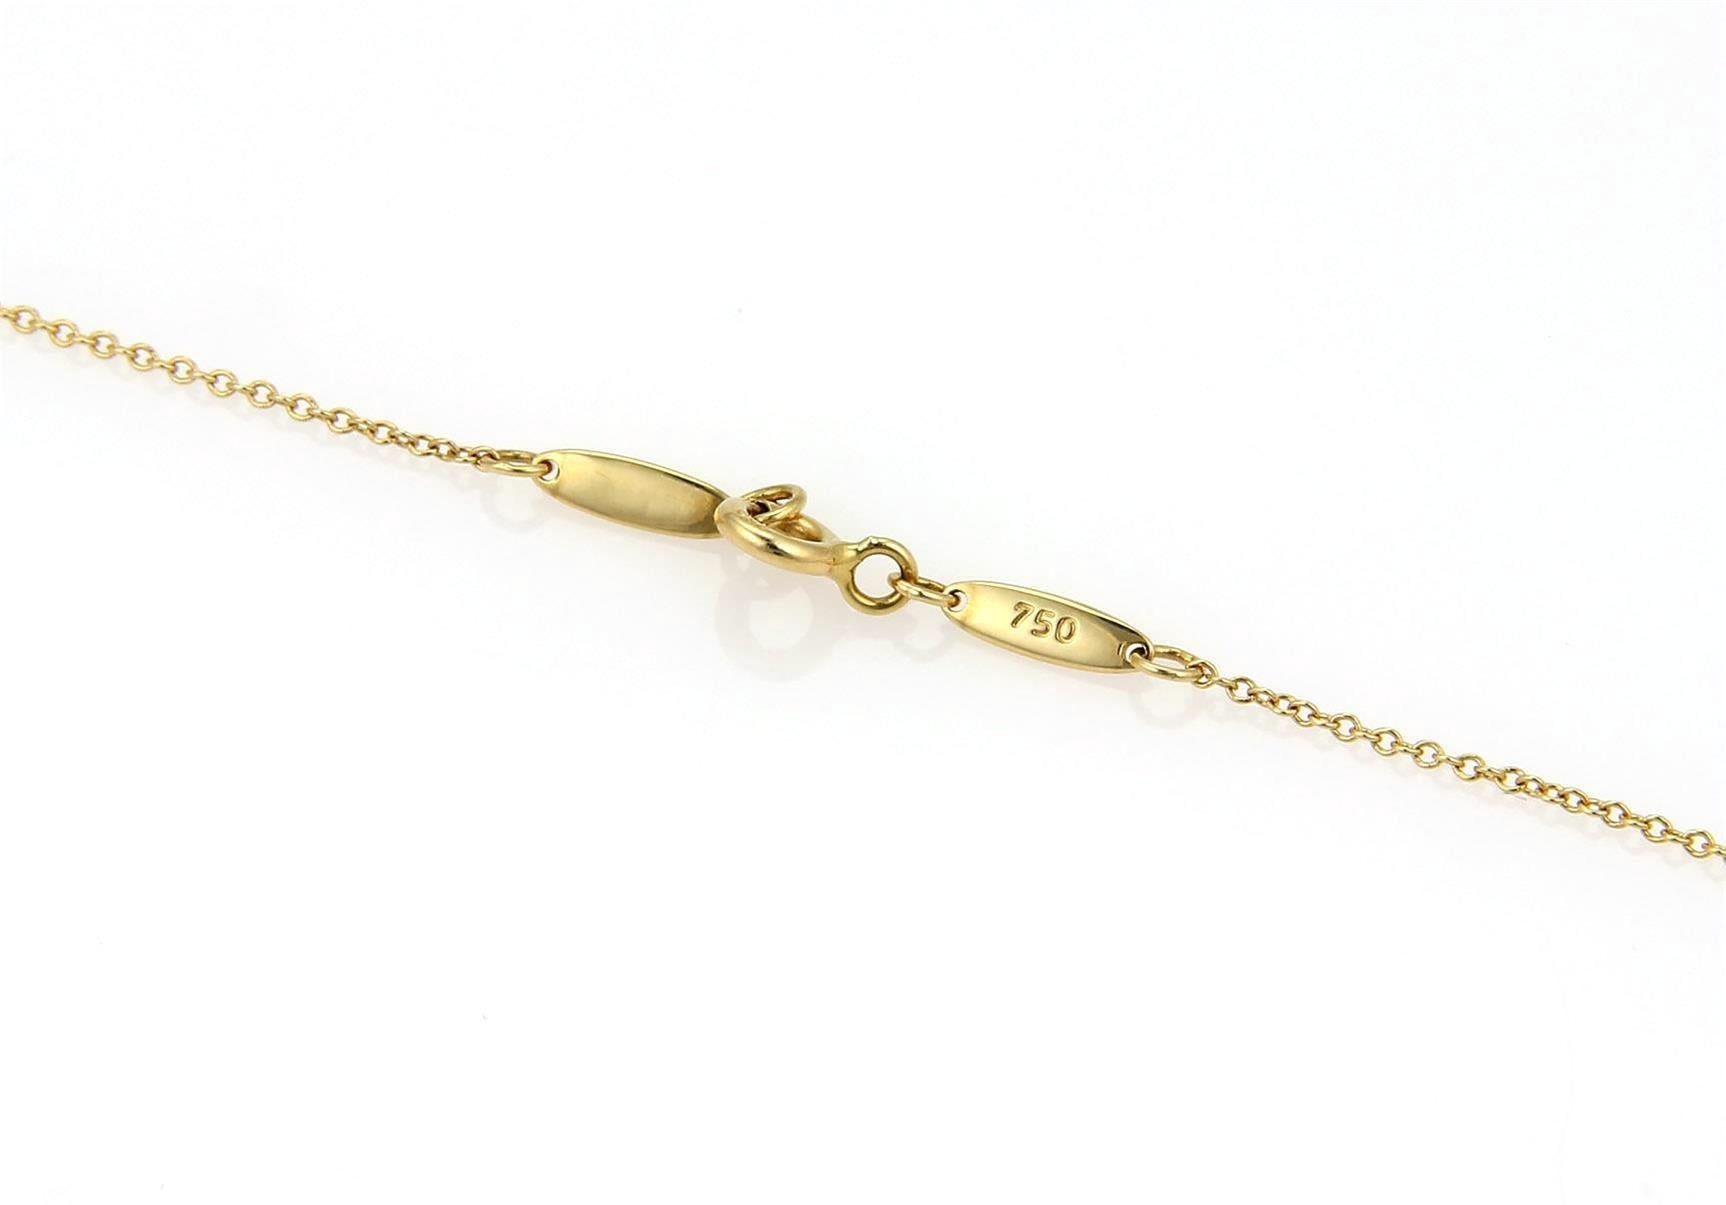 Briolette Cut Tiffany & Co. Peretti Teardrop Rock Crystal 18k Yellow Gold Pendant Necklace